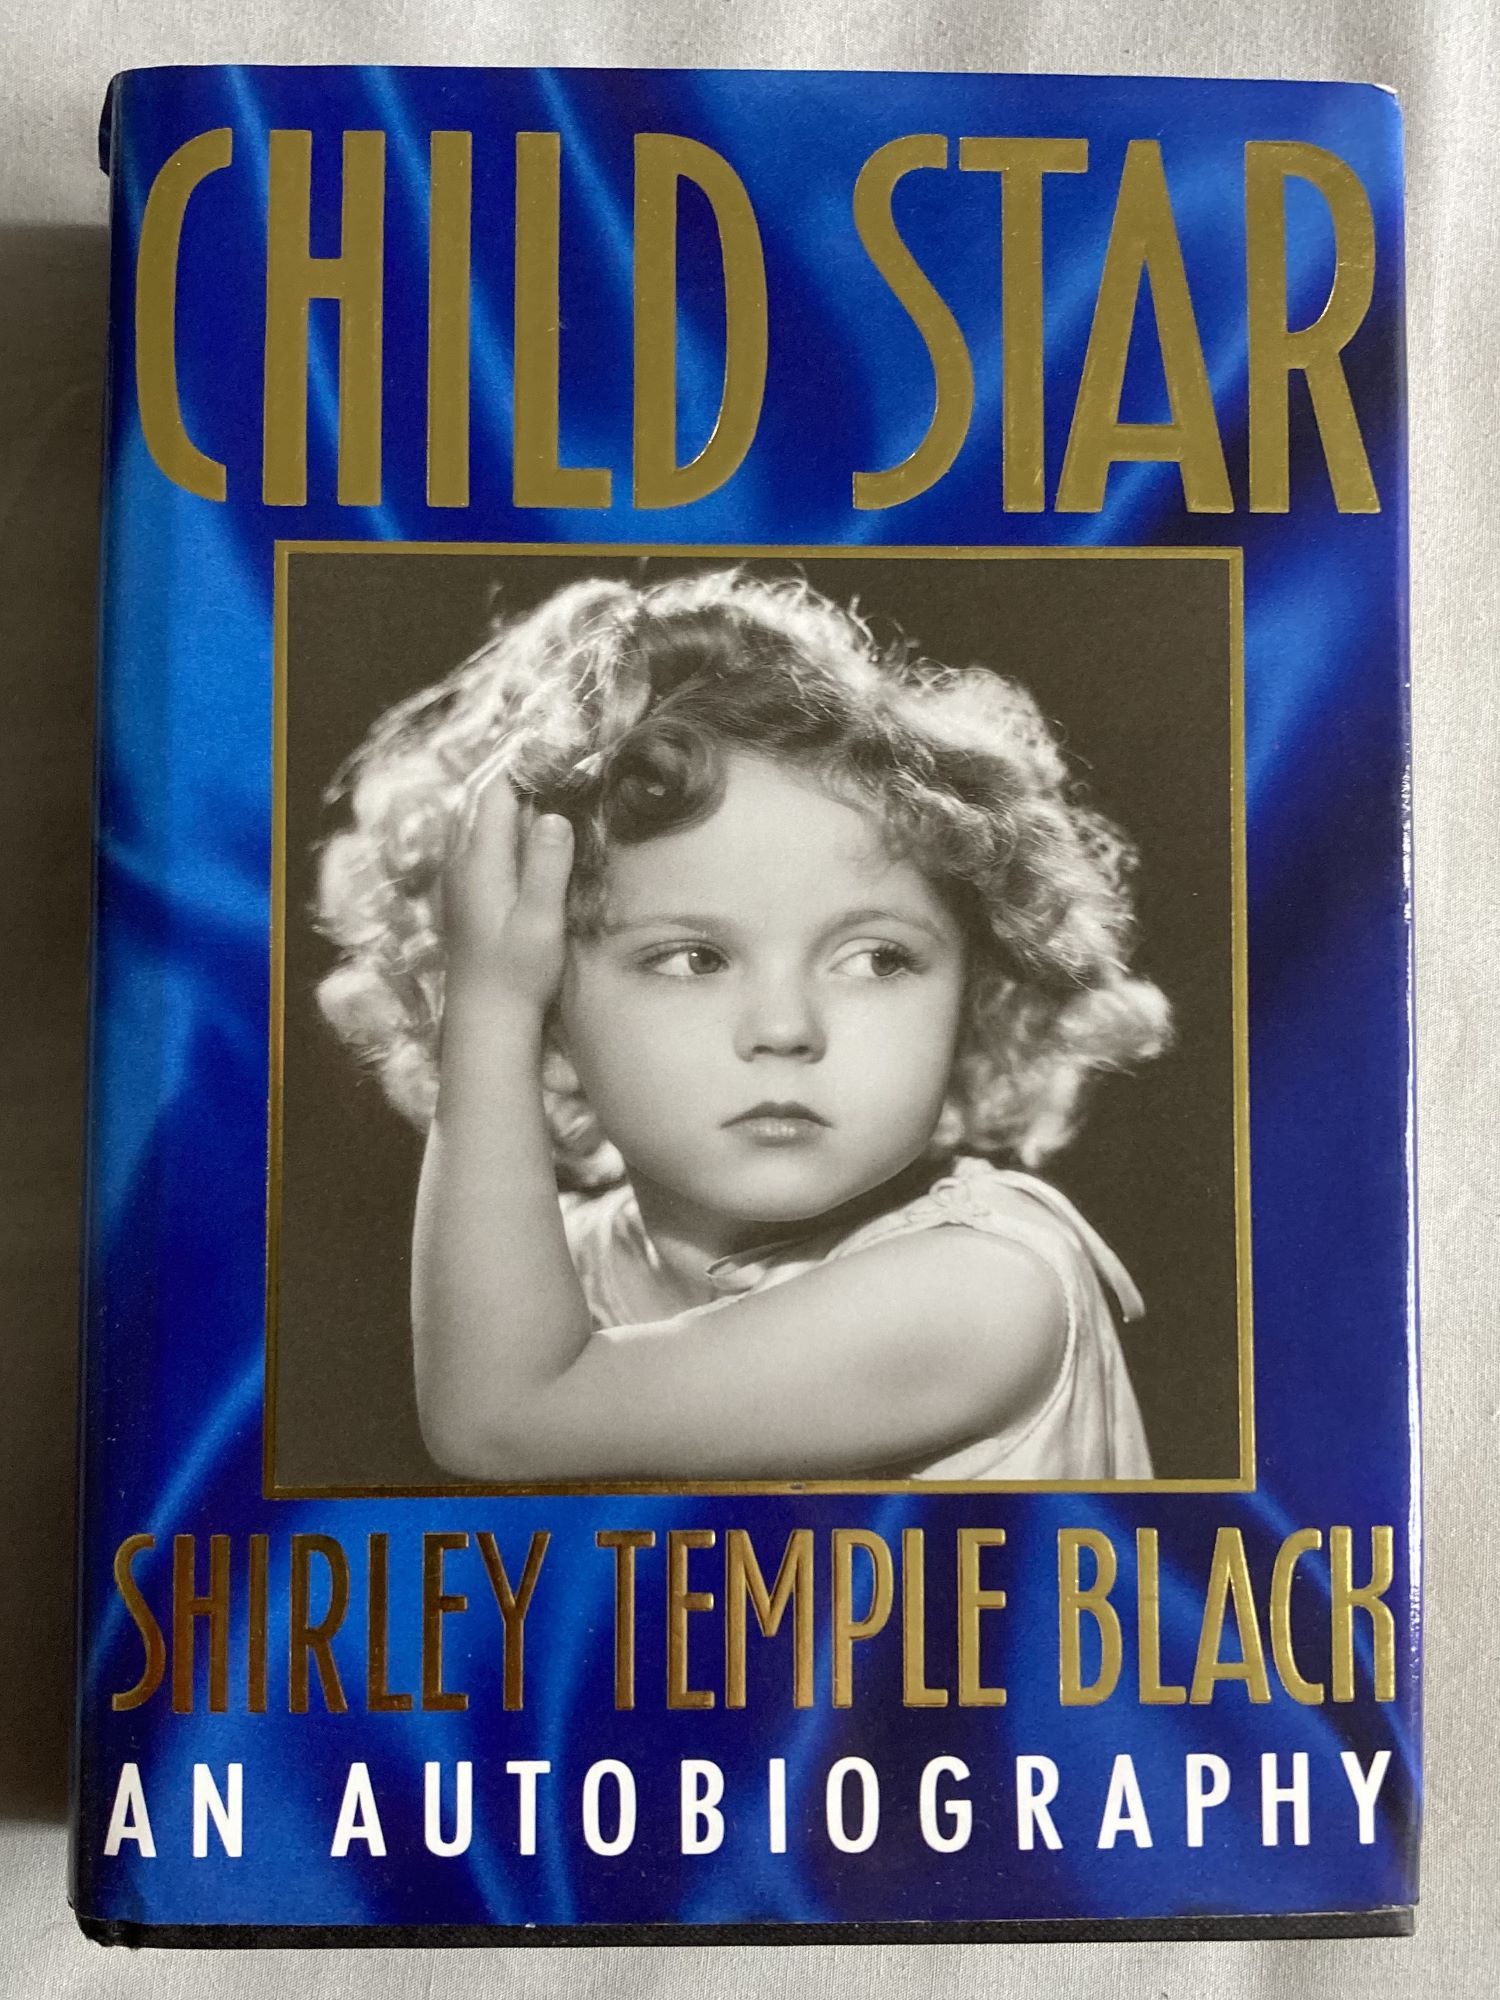 Shirley Temple Black signed inside hardback book. Child Star an Autobiography. Inscription on inside